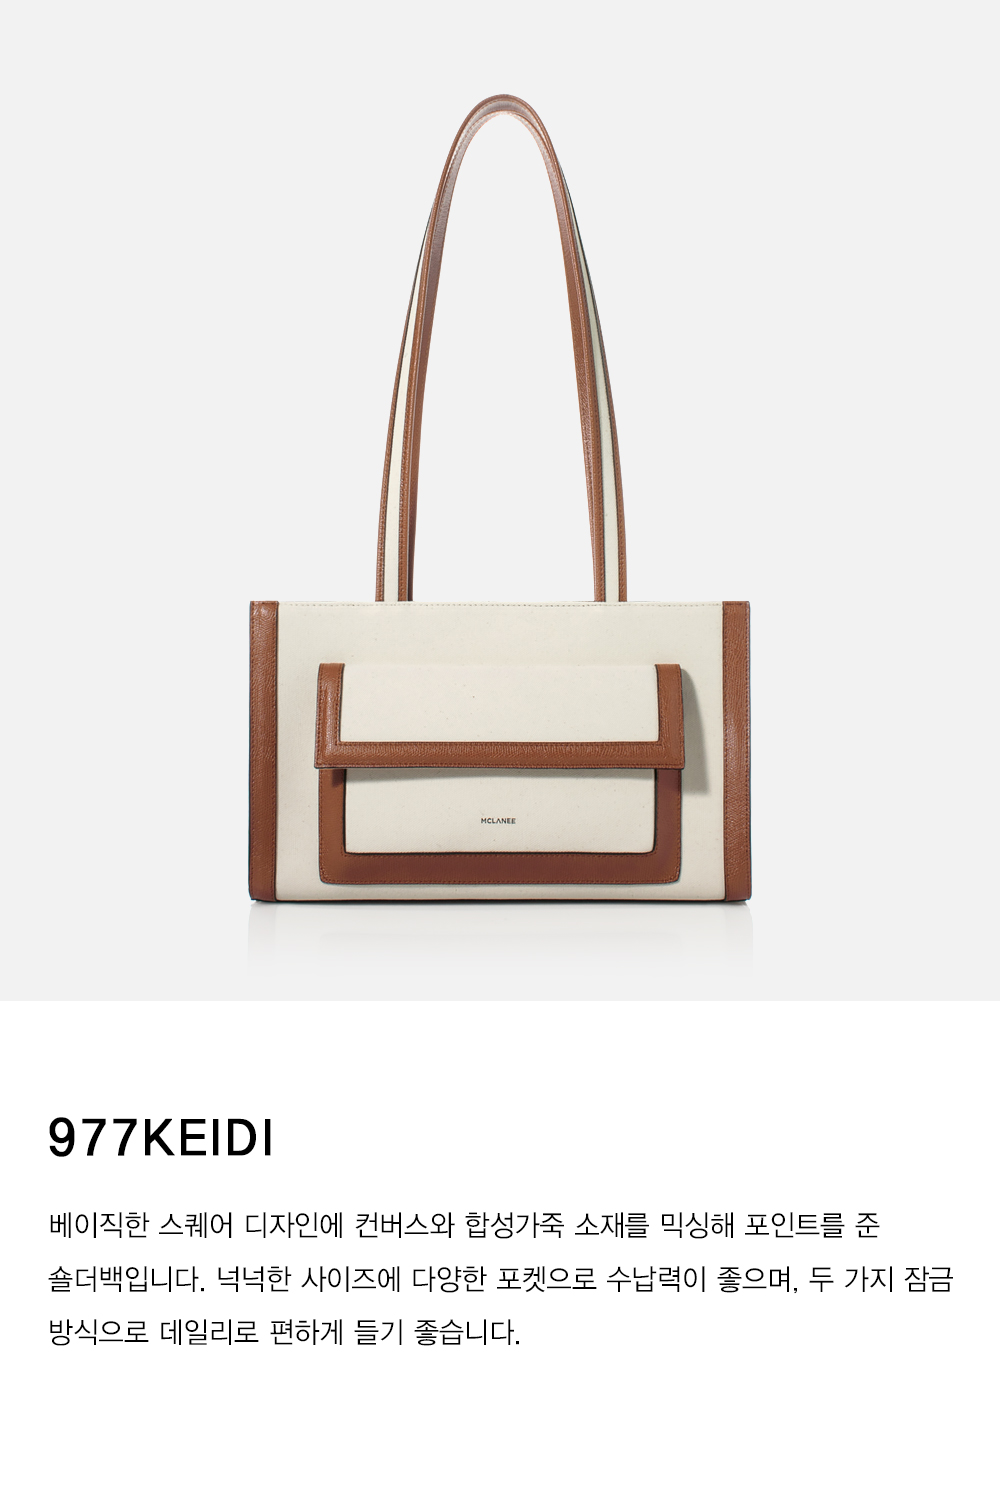 [MCLANEE] 977keidi shoulder bag - Brown